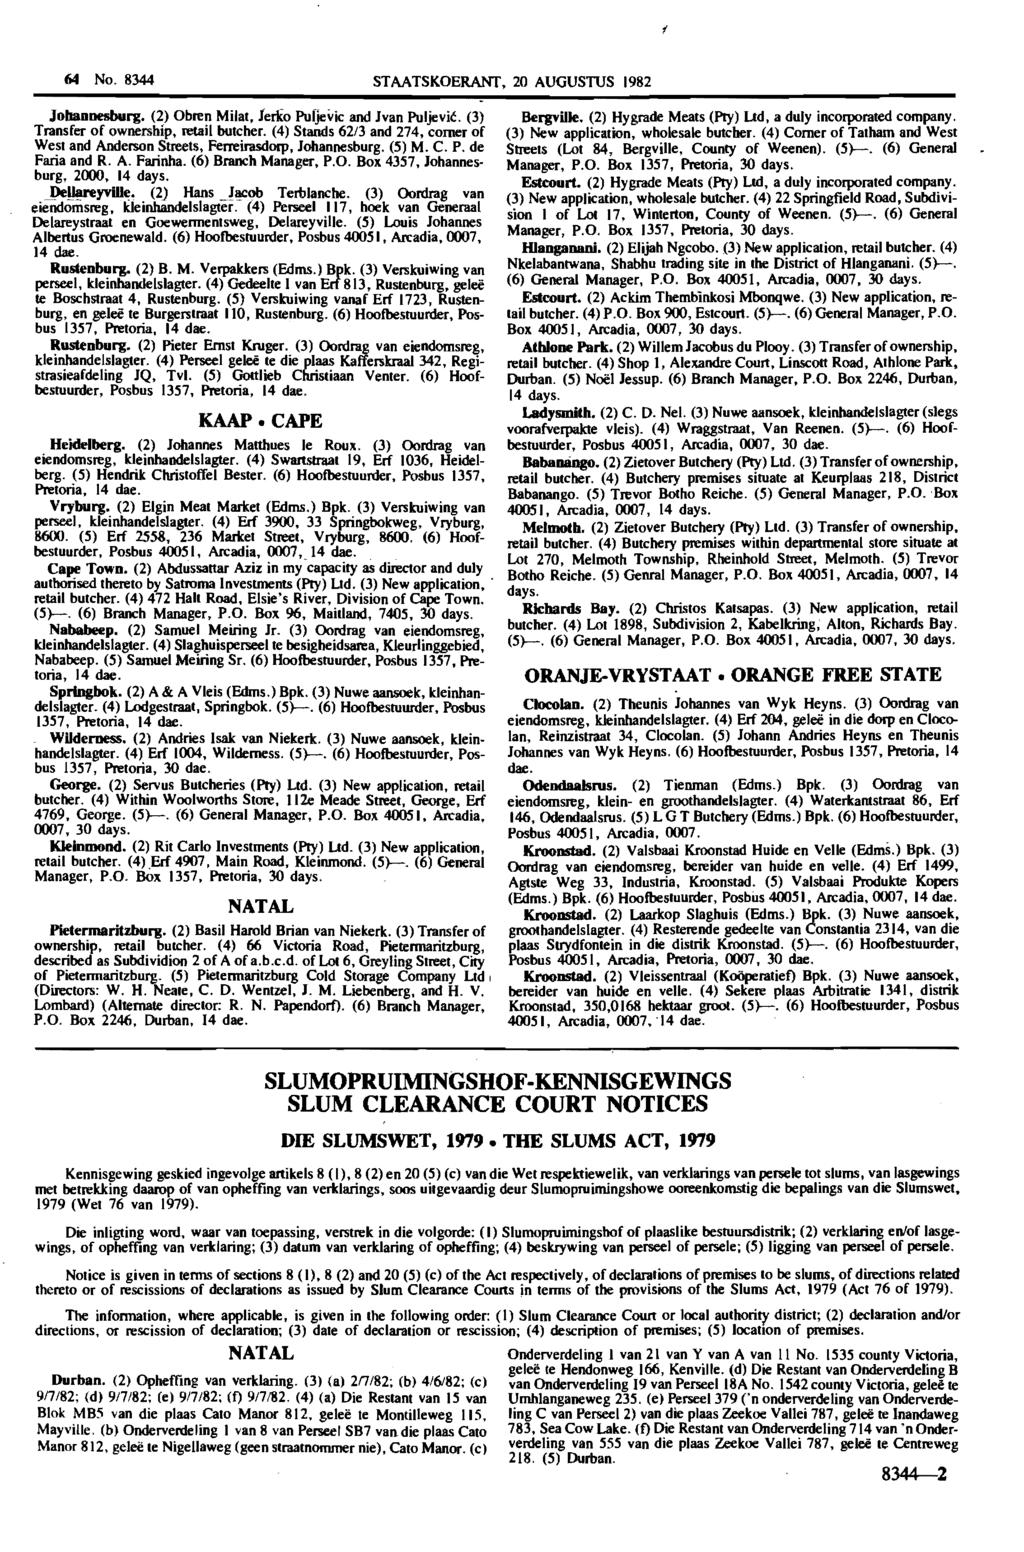 f 64 No. 8344 STAATSKOERANT, 20 AUGUSTUS 1982 Johannesburg. (2) Obren Milat, ierko Puljevic and Jvan Puljevic. (3) Transfer of ownership, retail butcher.